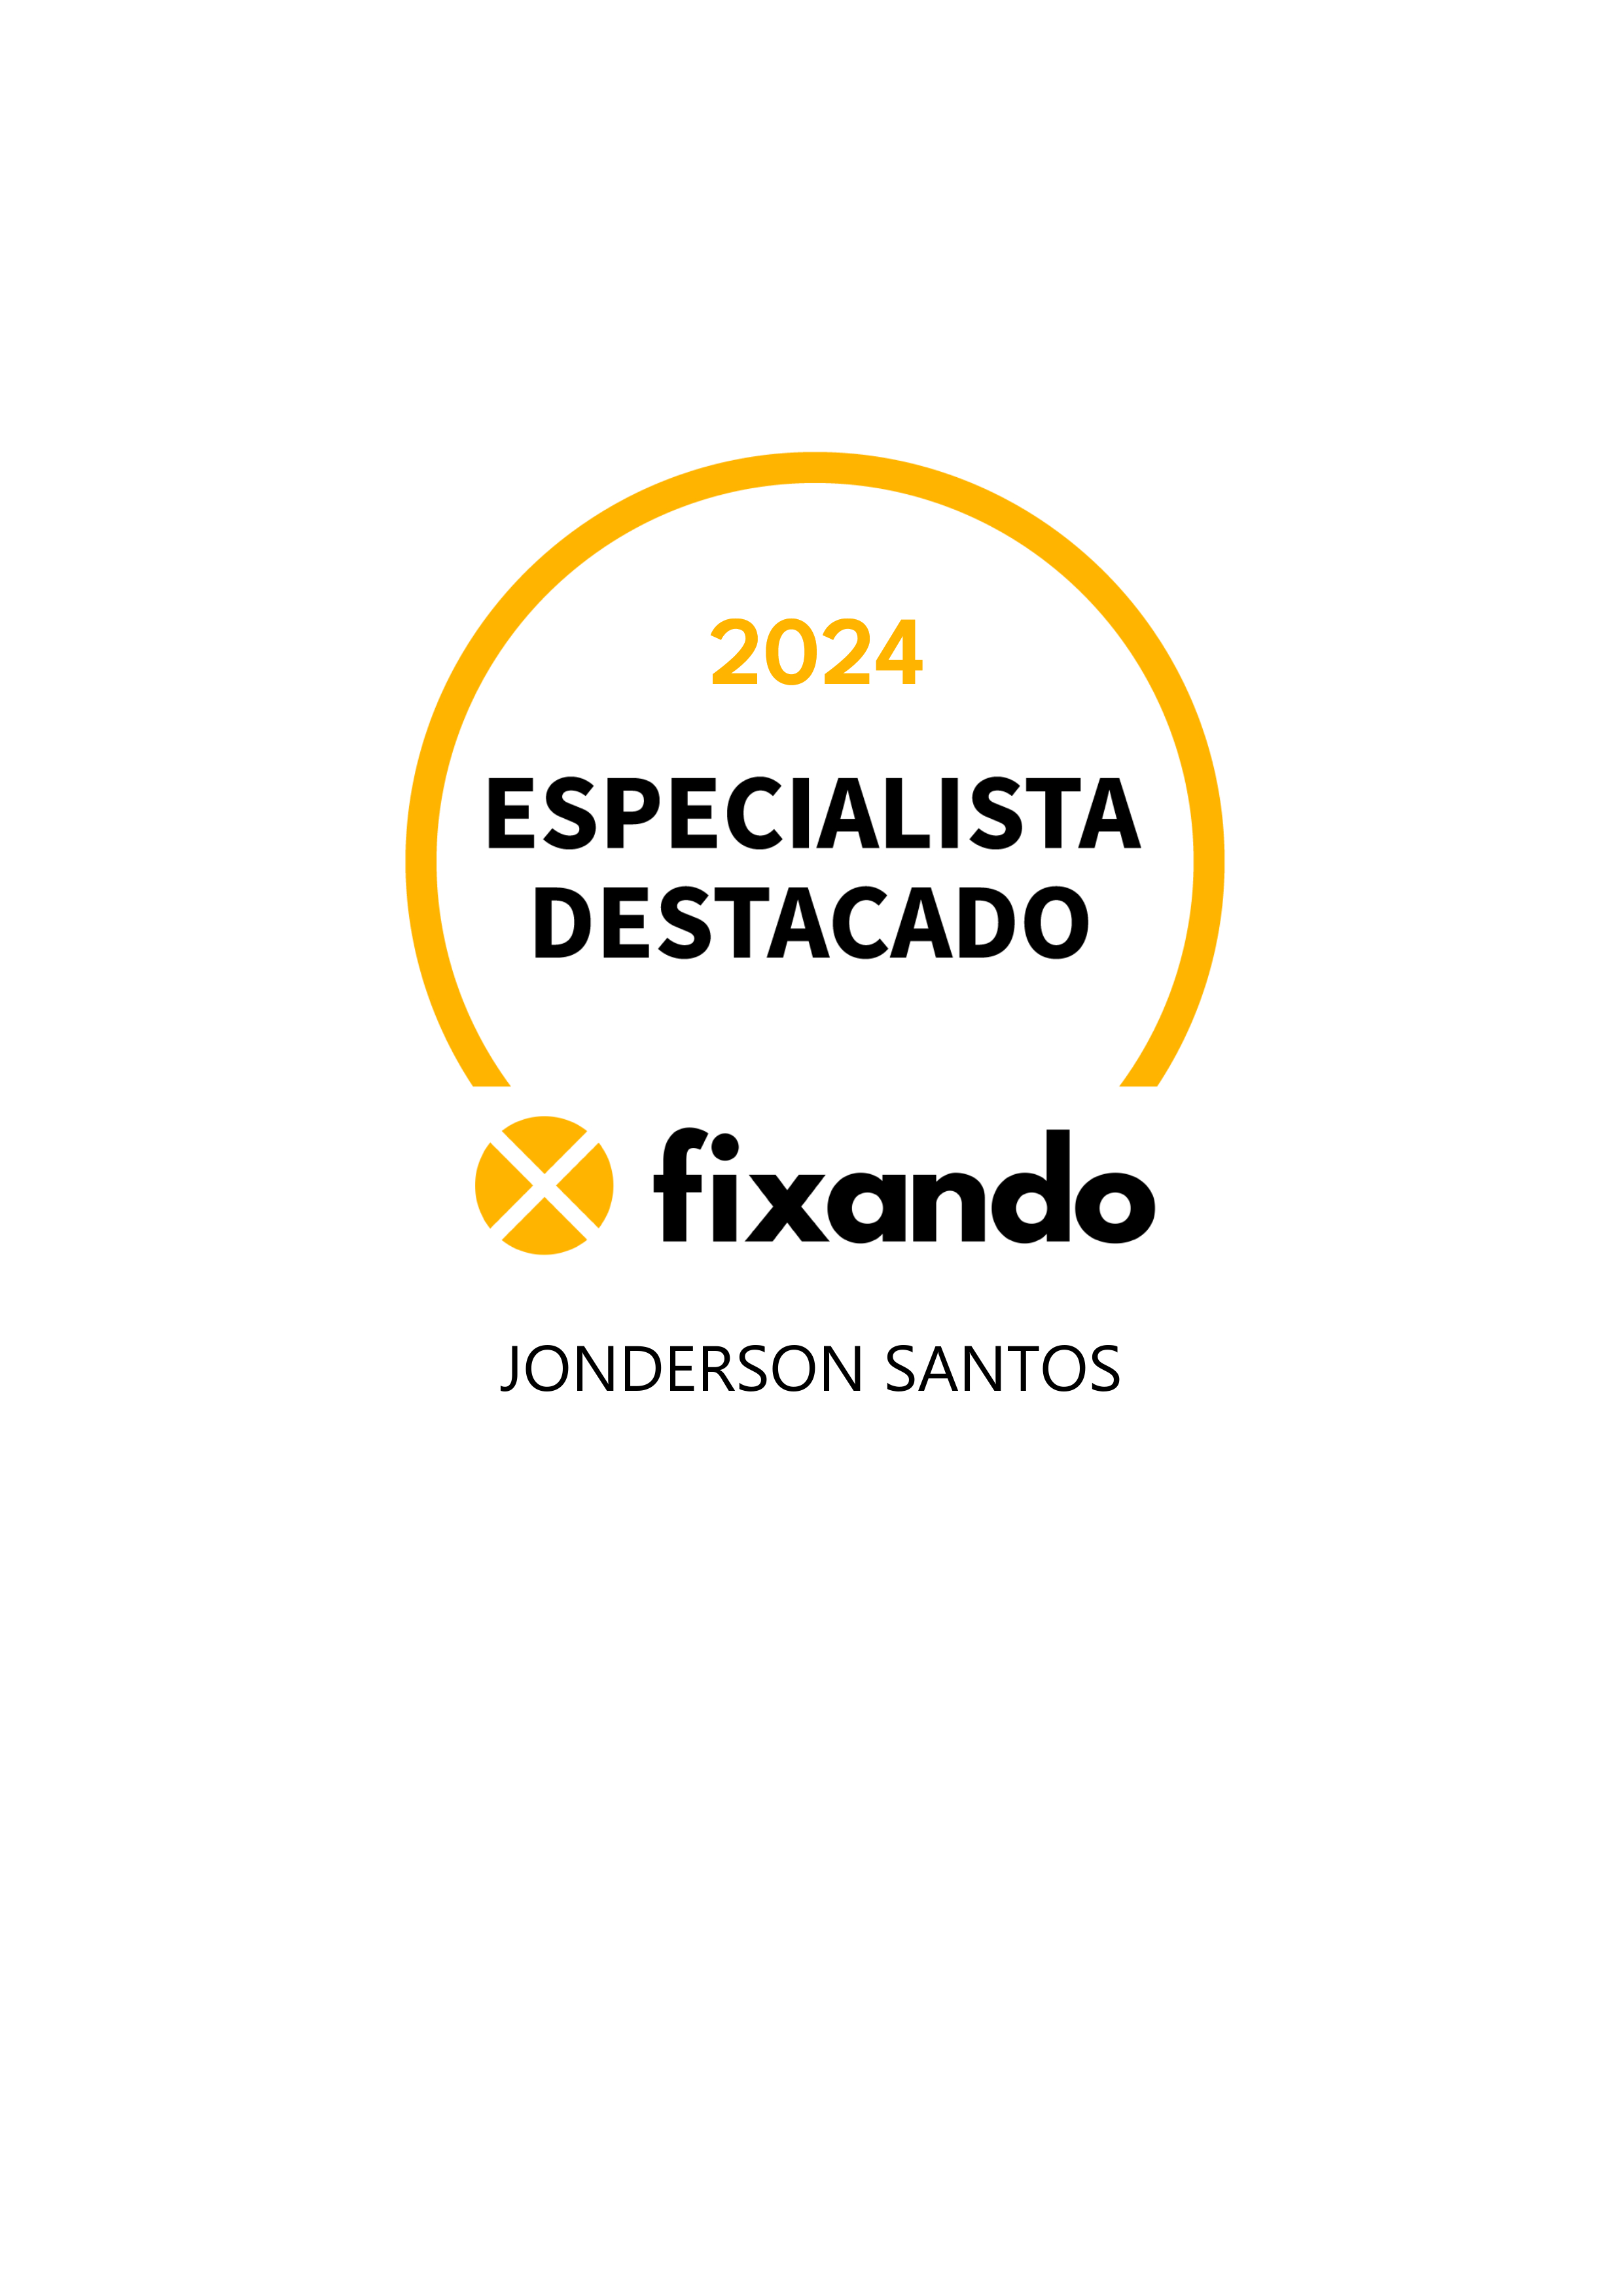 Jonderson Santos - Setúbal - Design de Logotipos